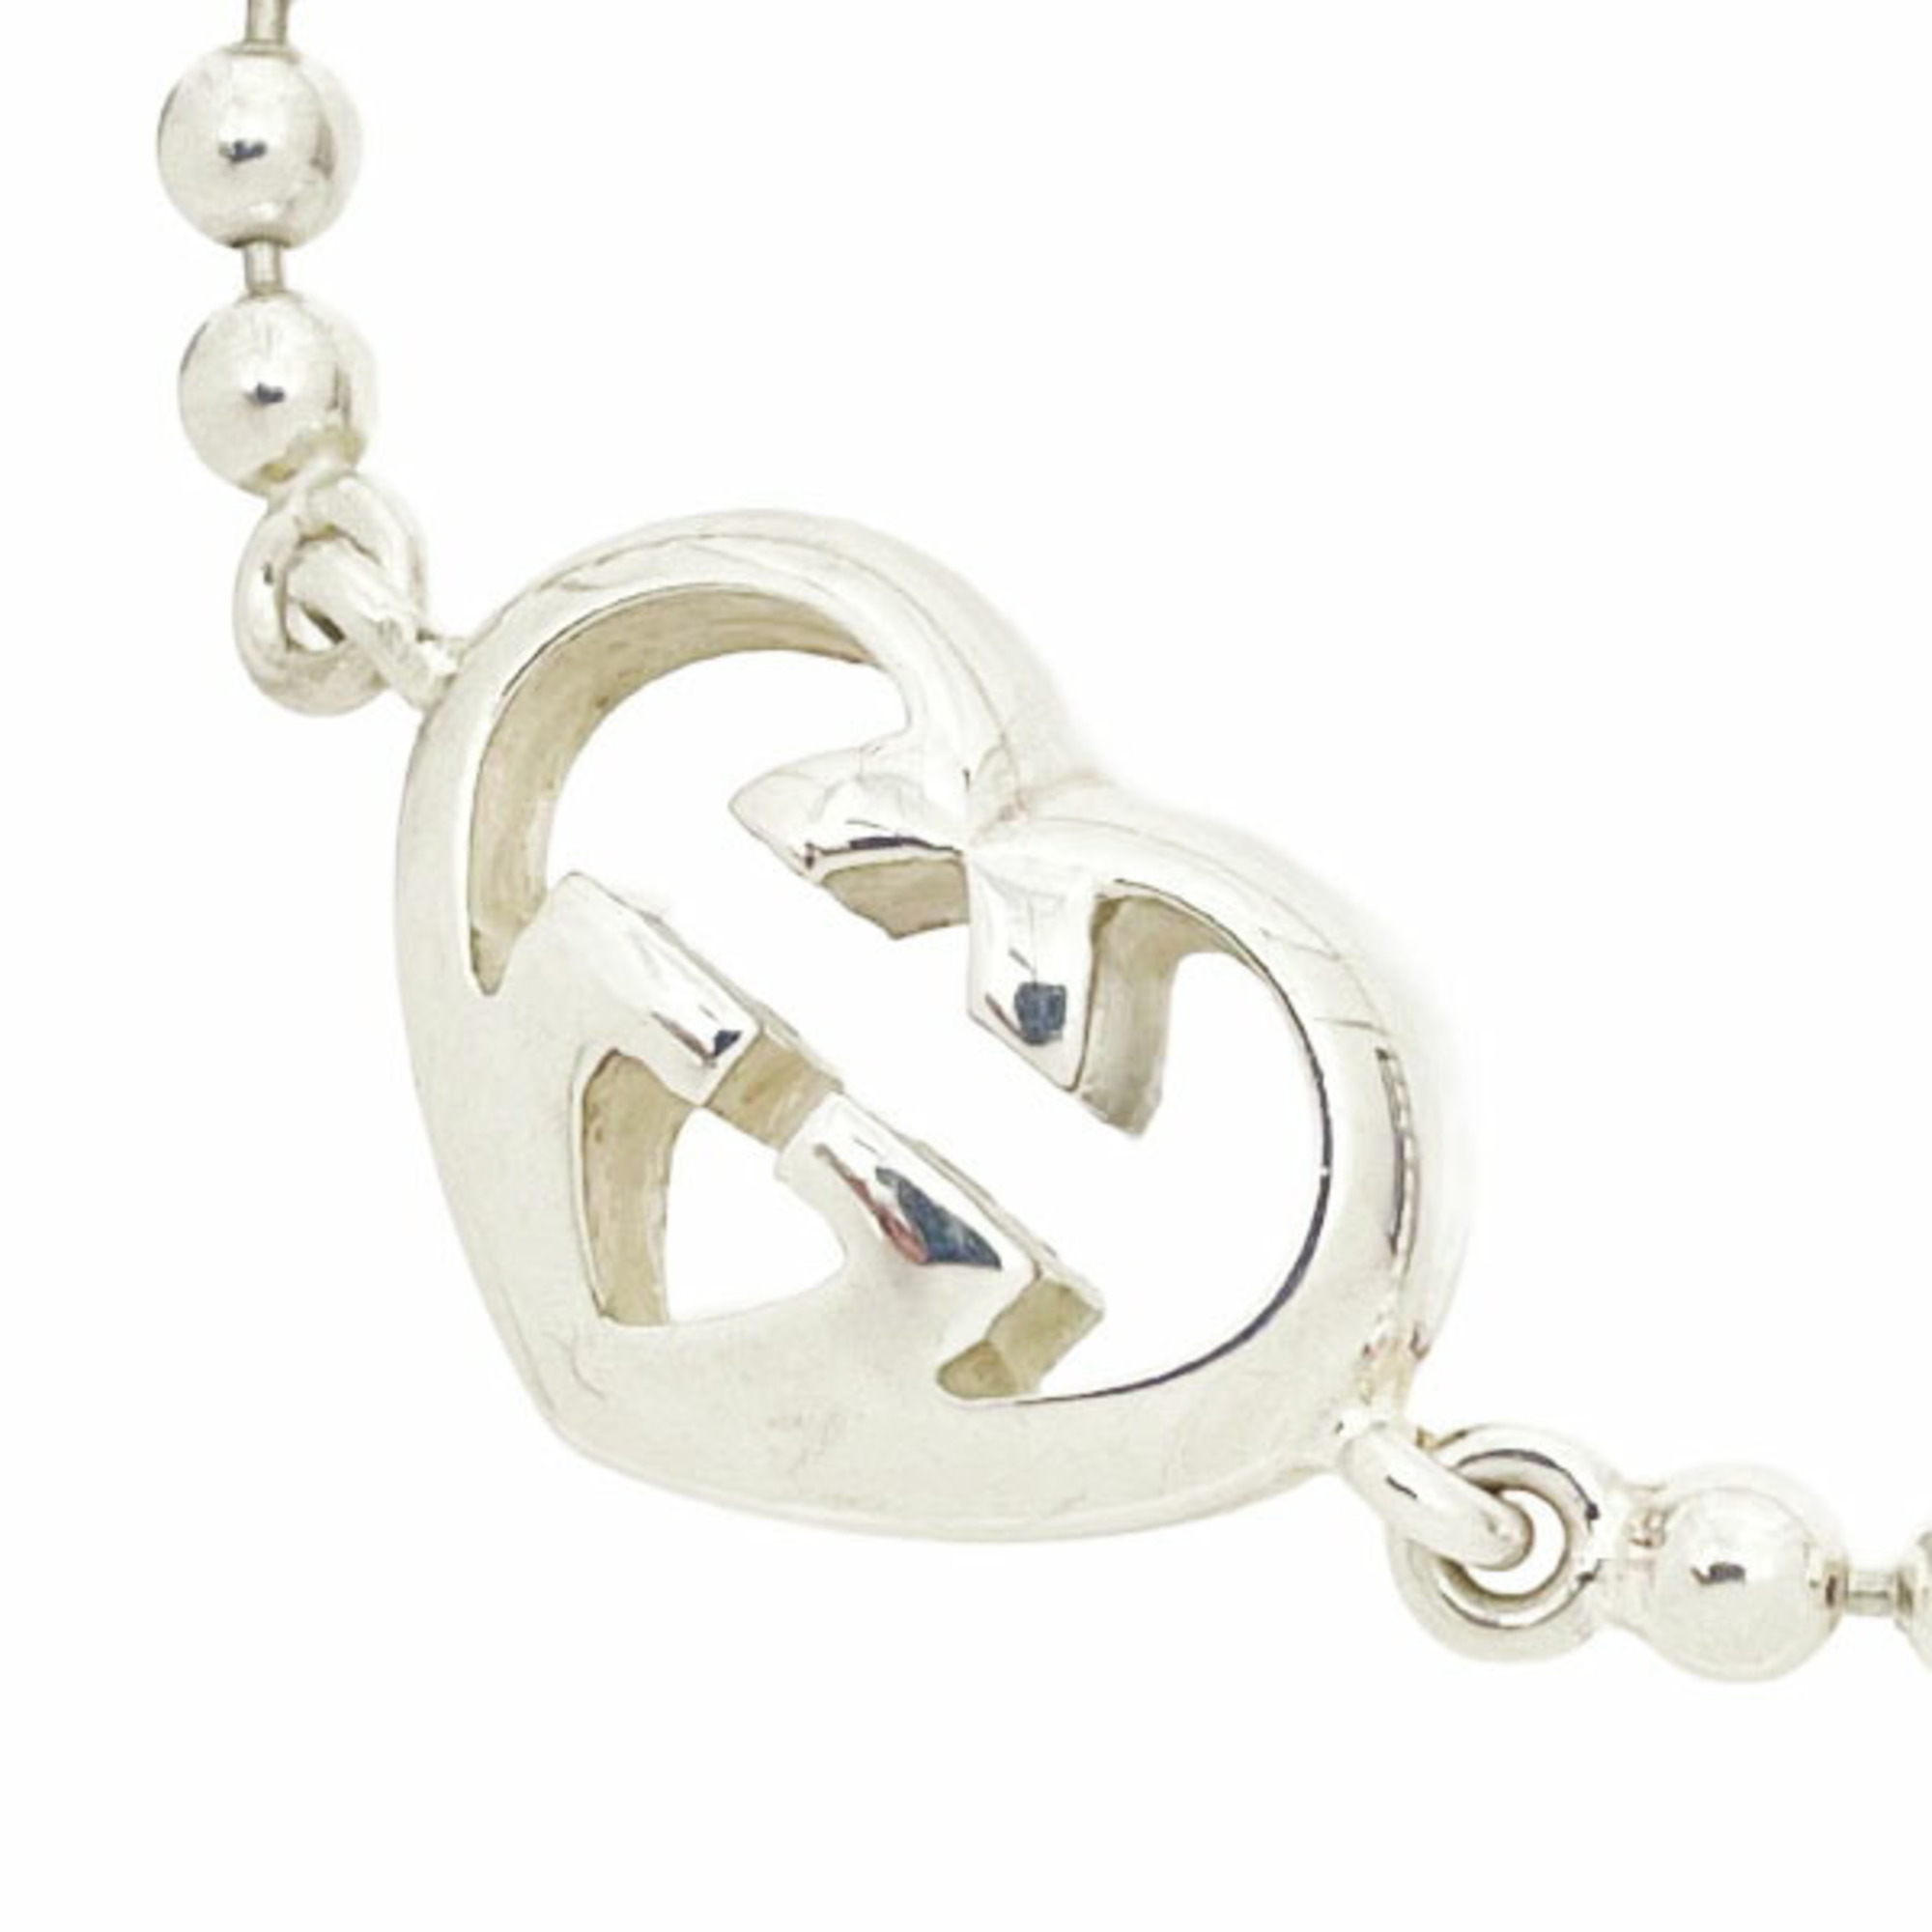 GUCCI Bracelet Love Brit Interlocking G Heart Ag925 SV925 Silver Size 18cm 246575 Ball Chain YY-12972